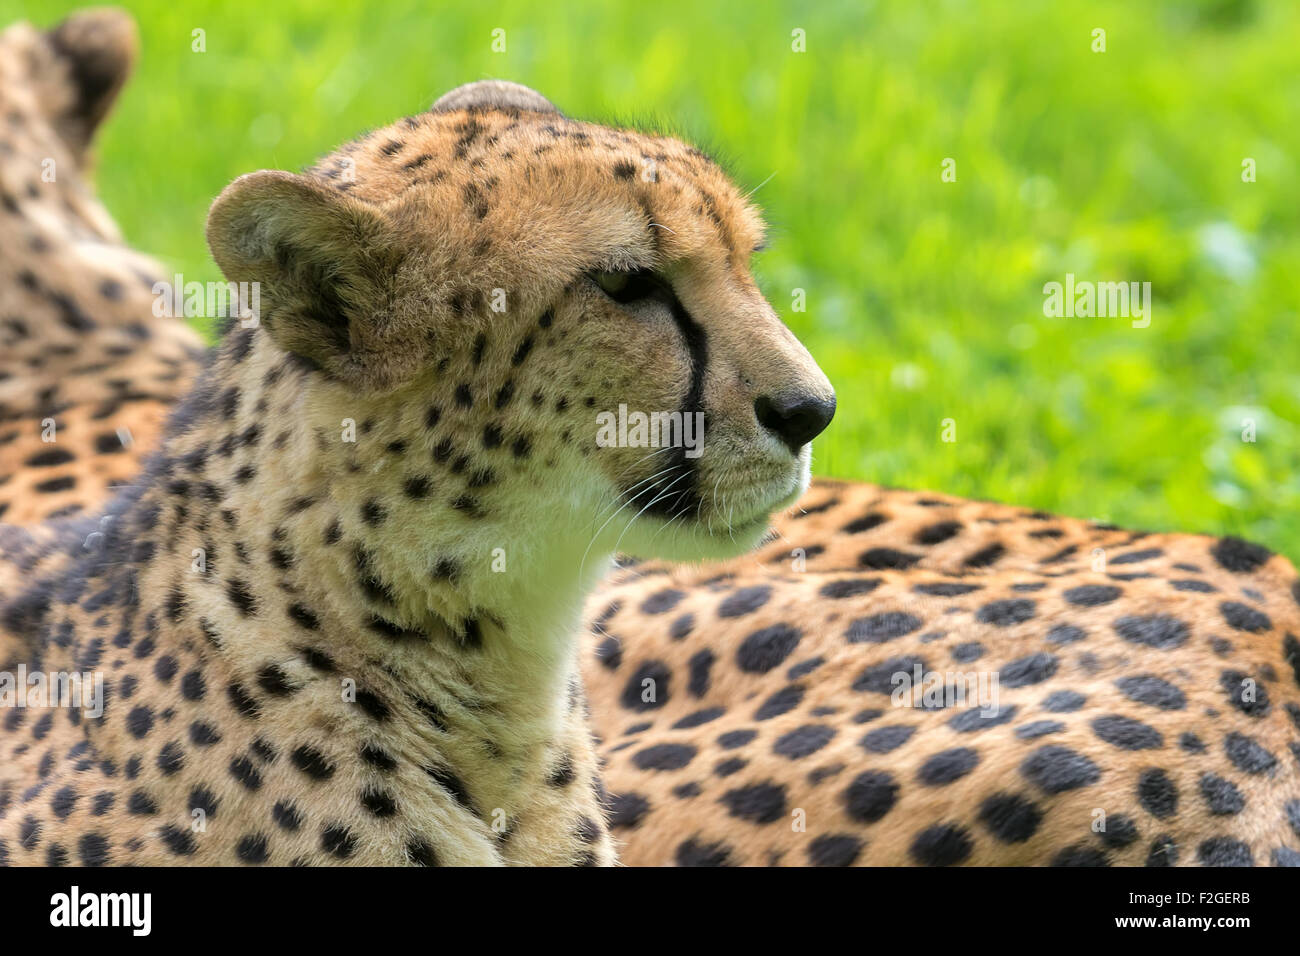 Cheetah Laying Down Resting Closeup Portrait Stock Photo